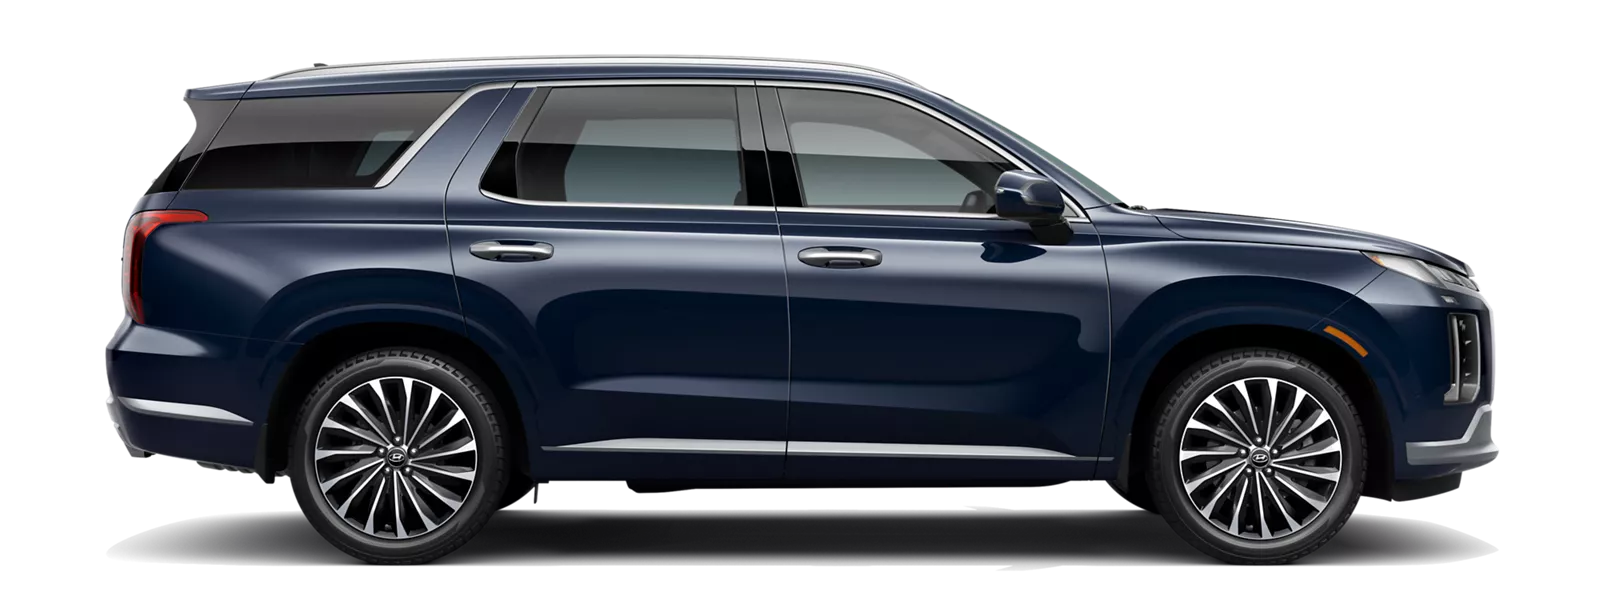 New Hyundai Elantra For Sale